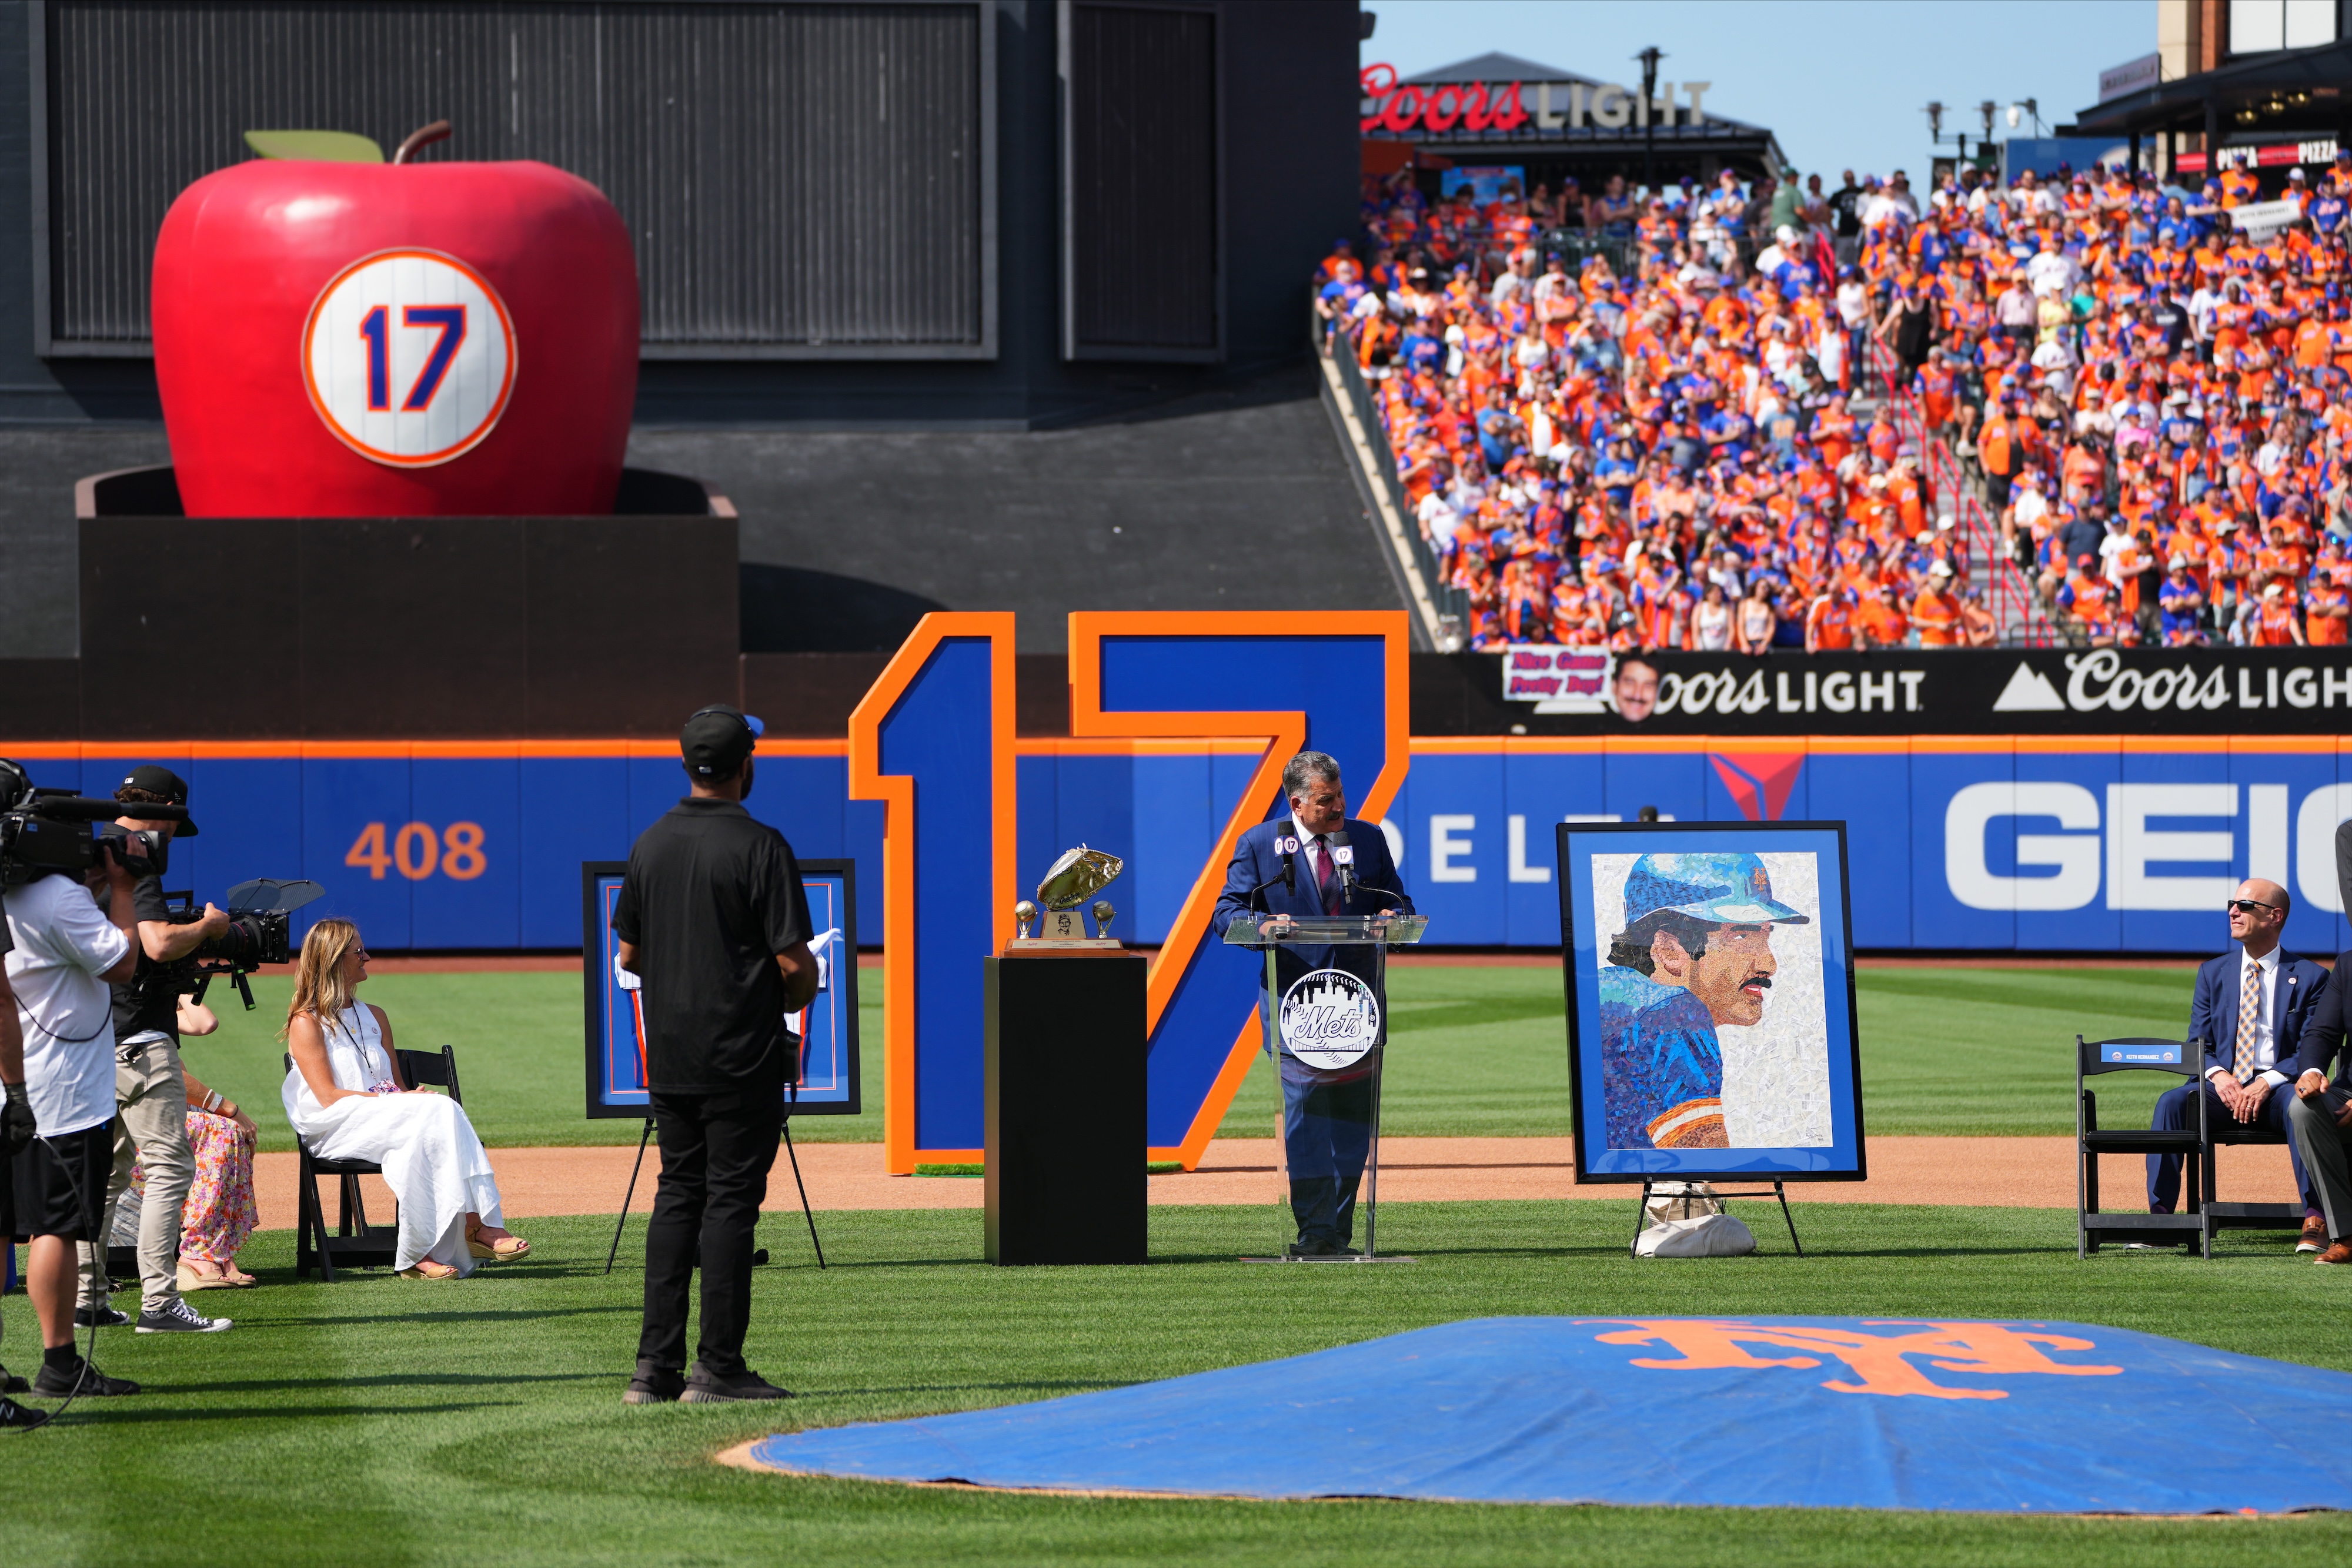 2022 Topps Now #500 KEITH HERNANDEZ #17 Retired New York Mets NEW